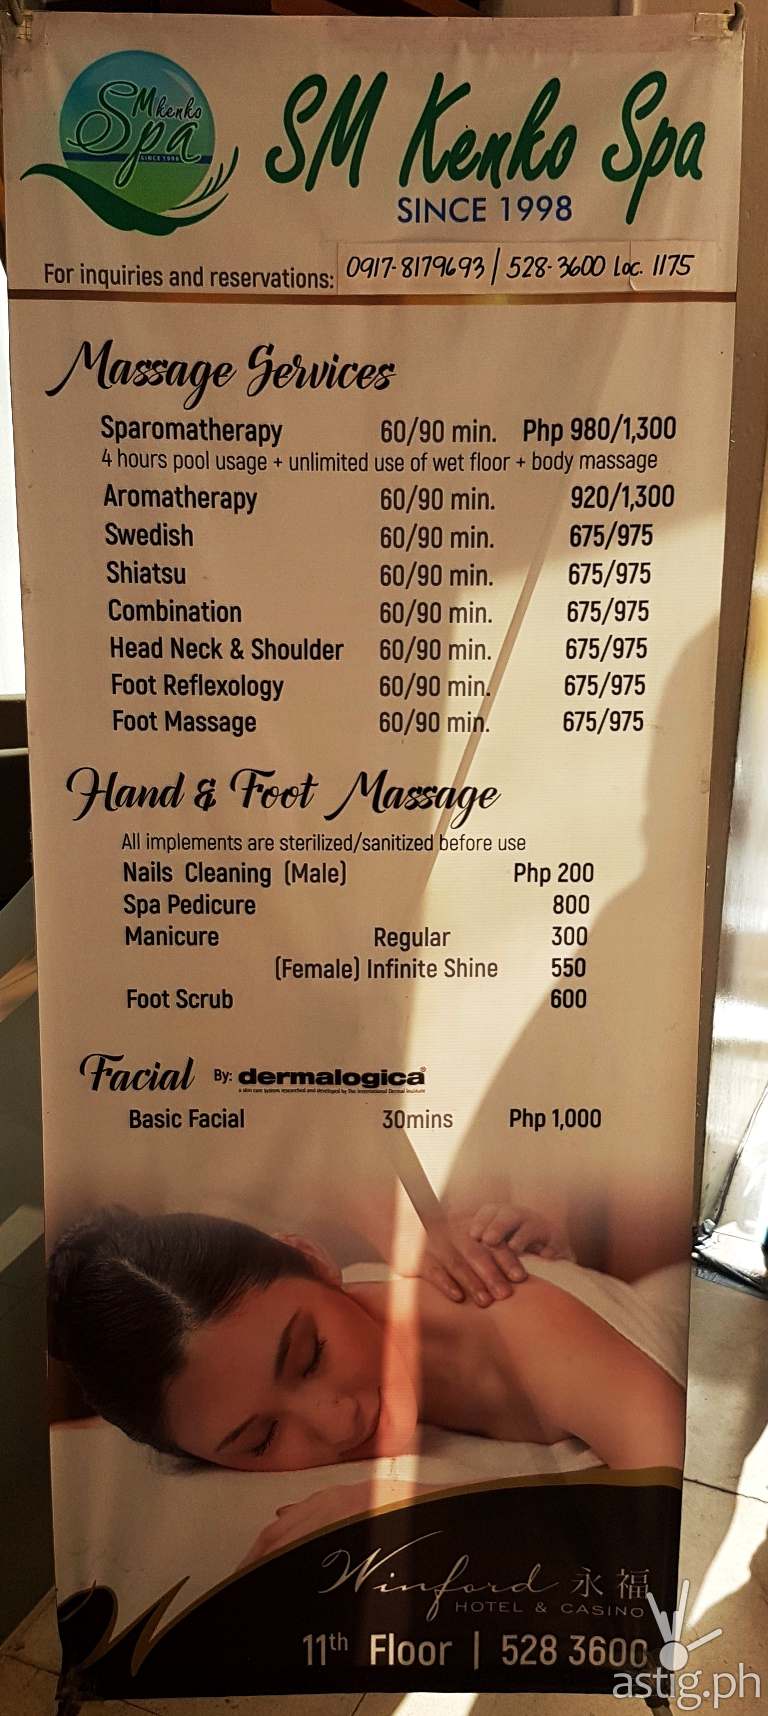 SM Kenko Spa at Winford Hotel Manila - Price list